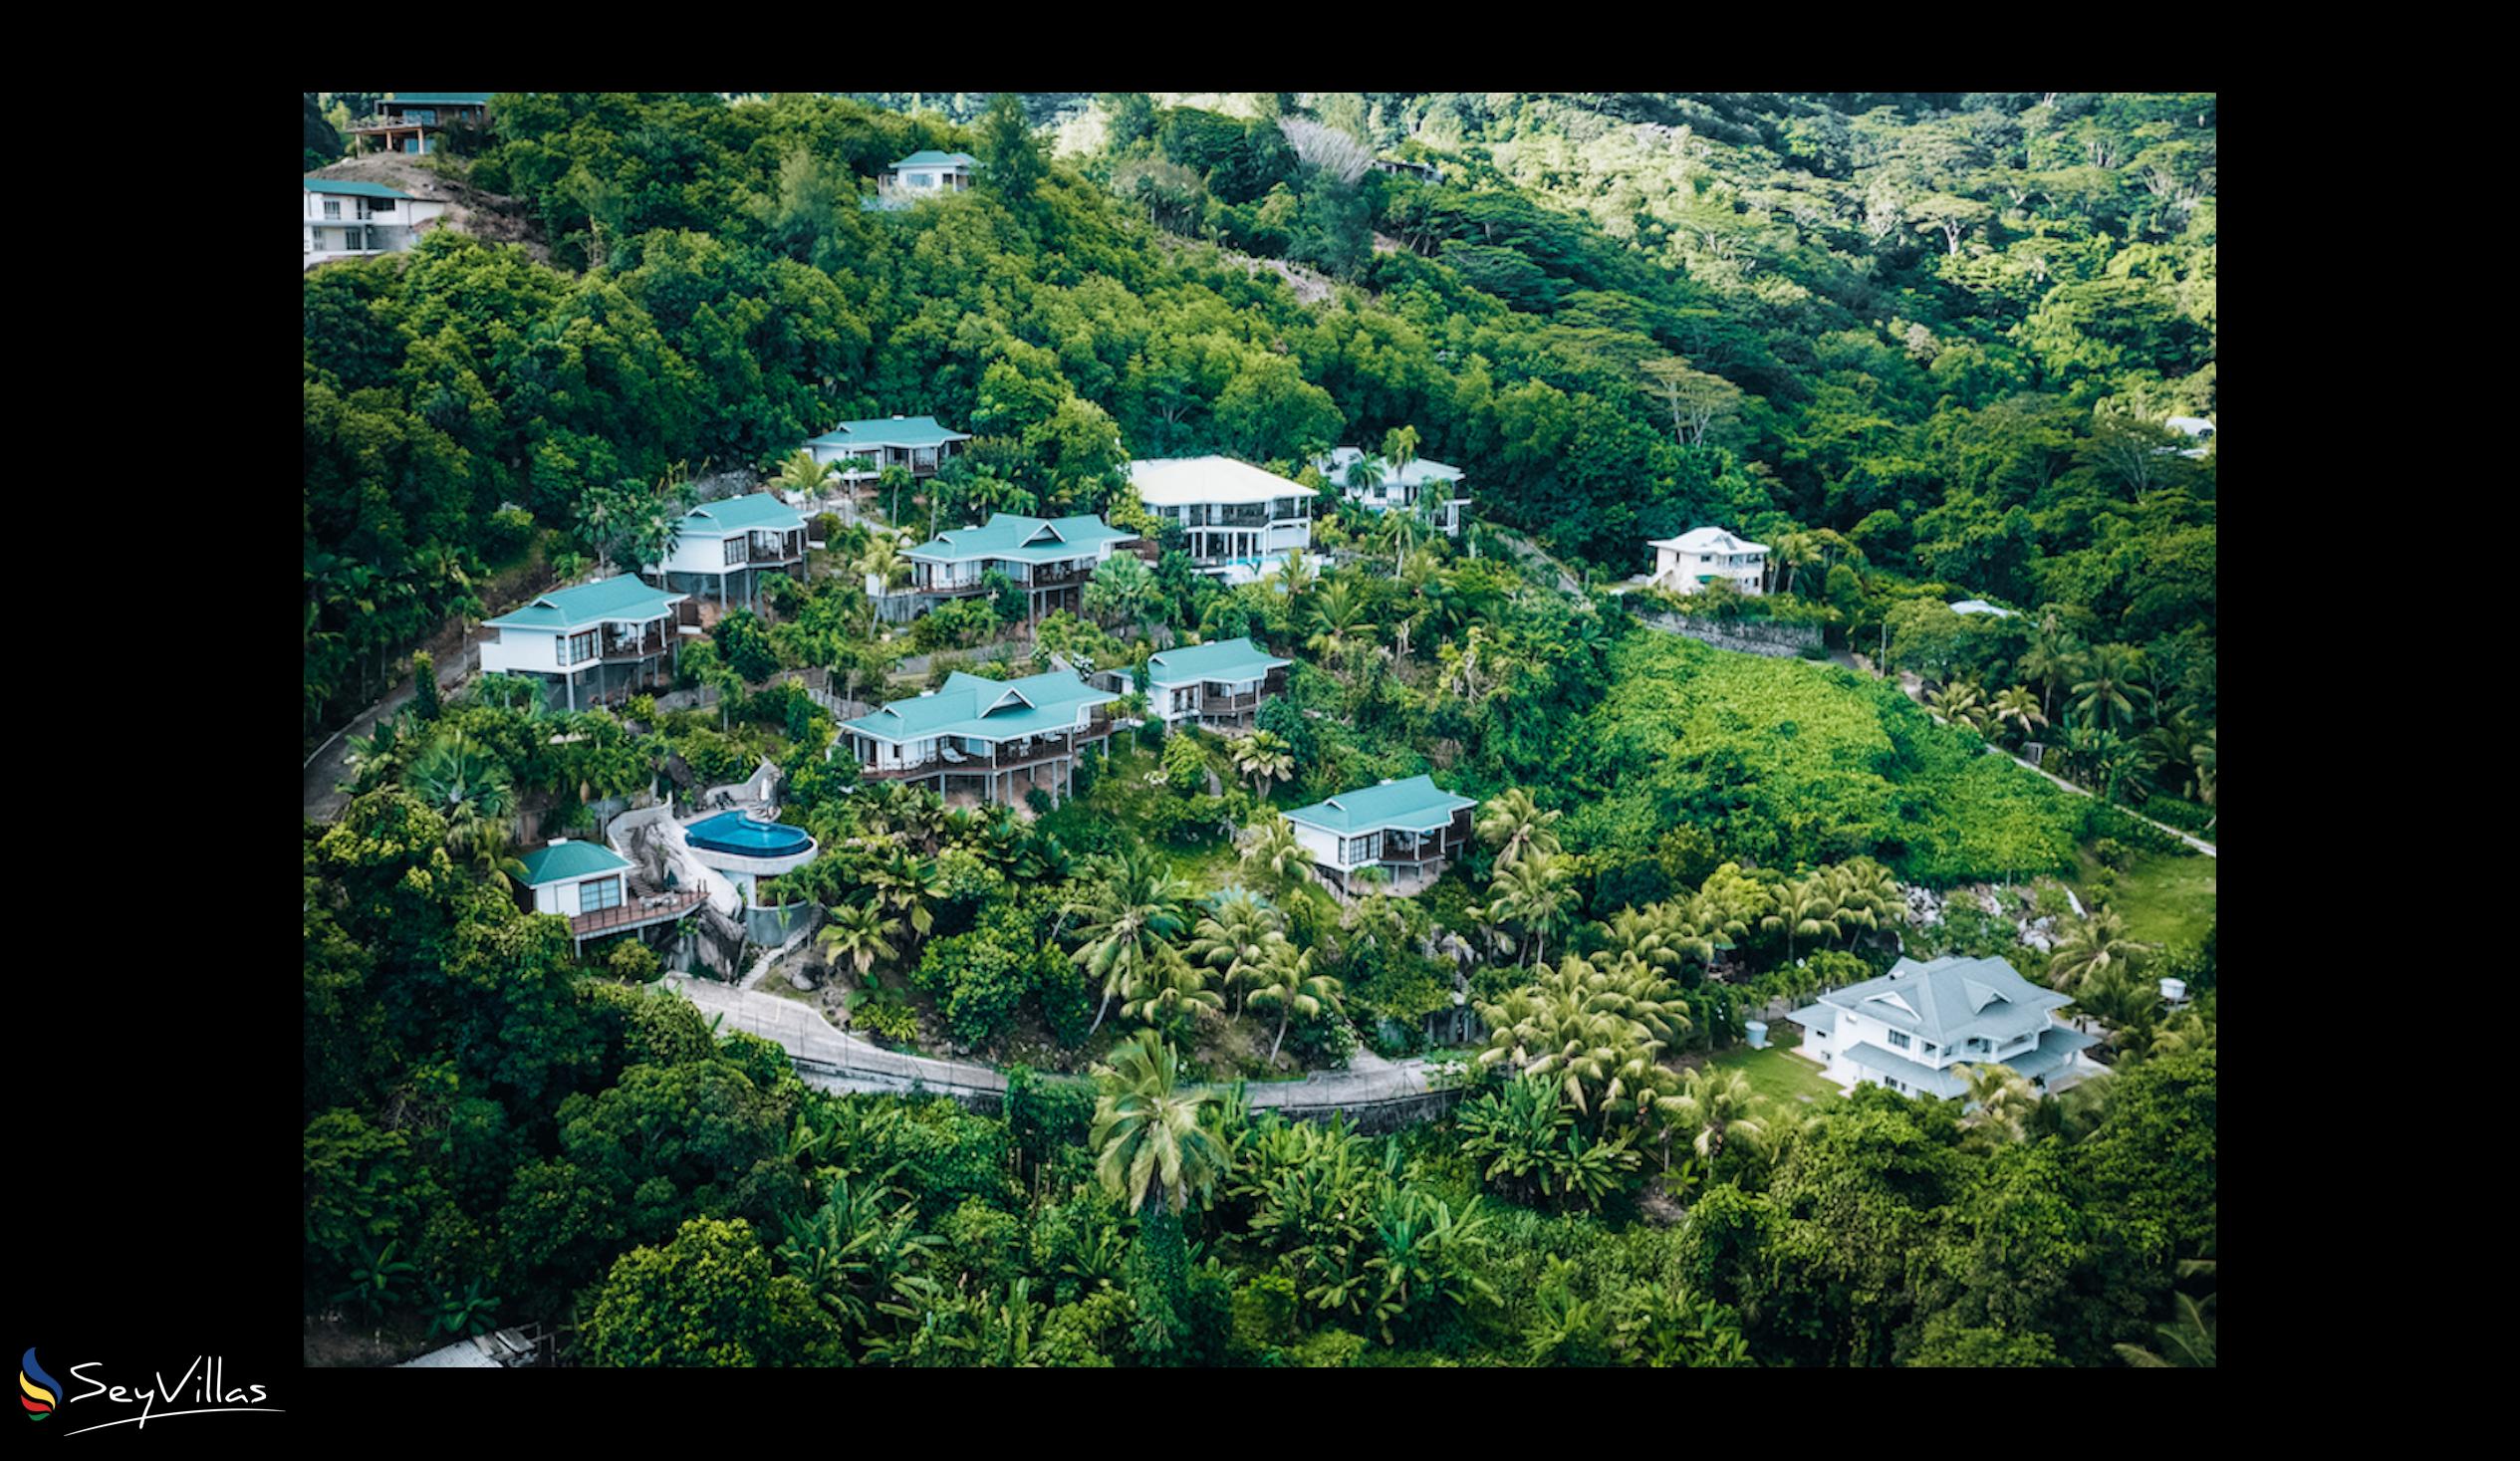 Photo 45: Villas de Jardin - Outdoor area - Mahé (Seychelles)